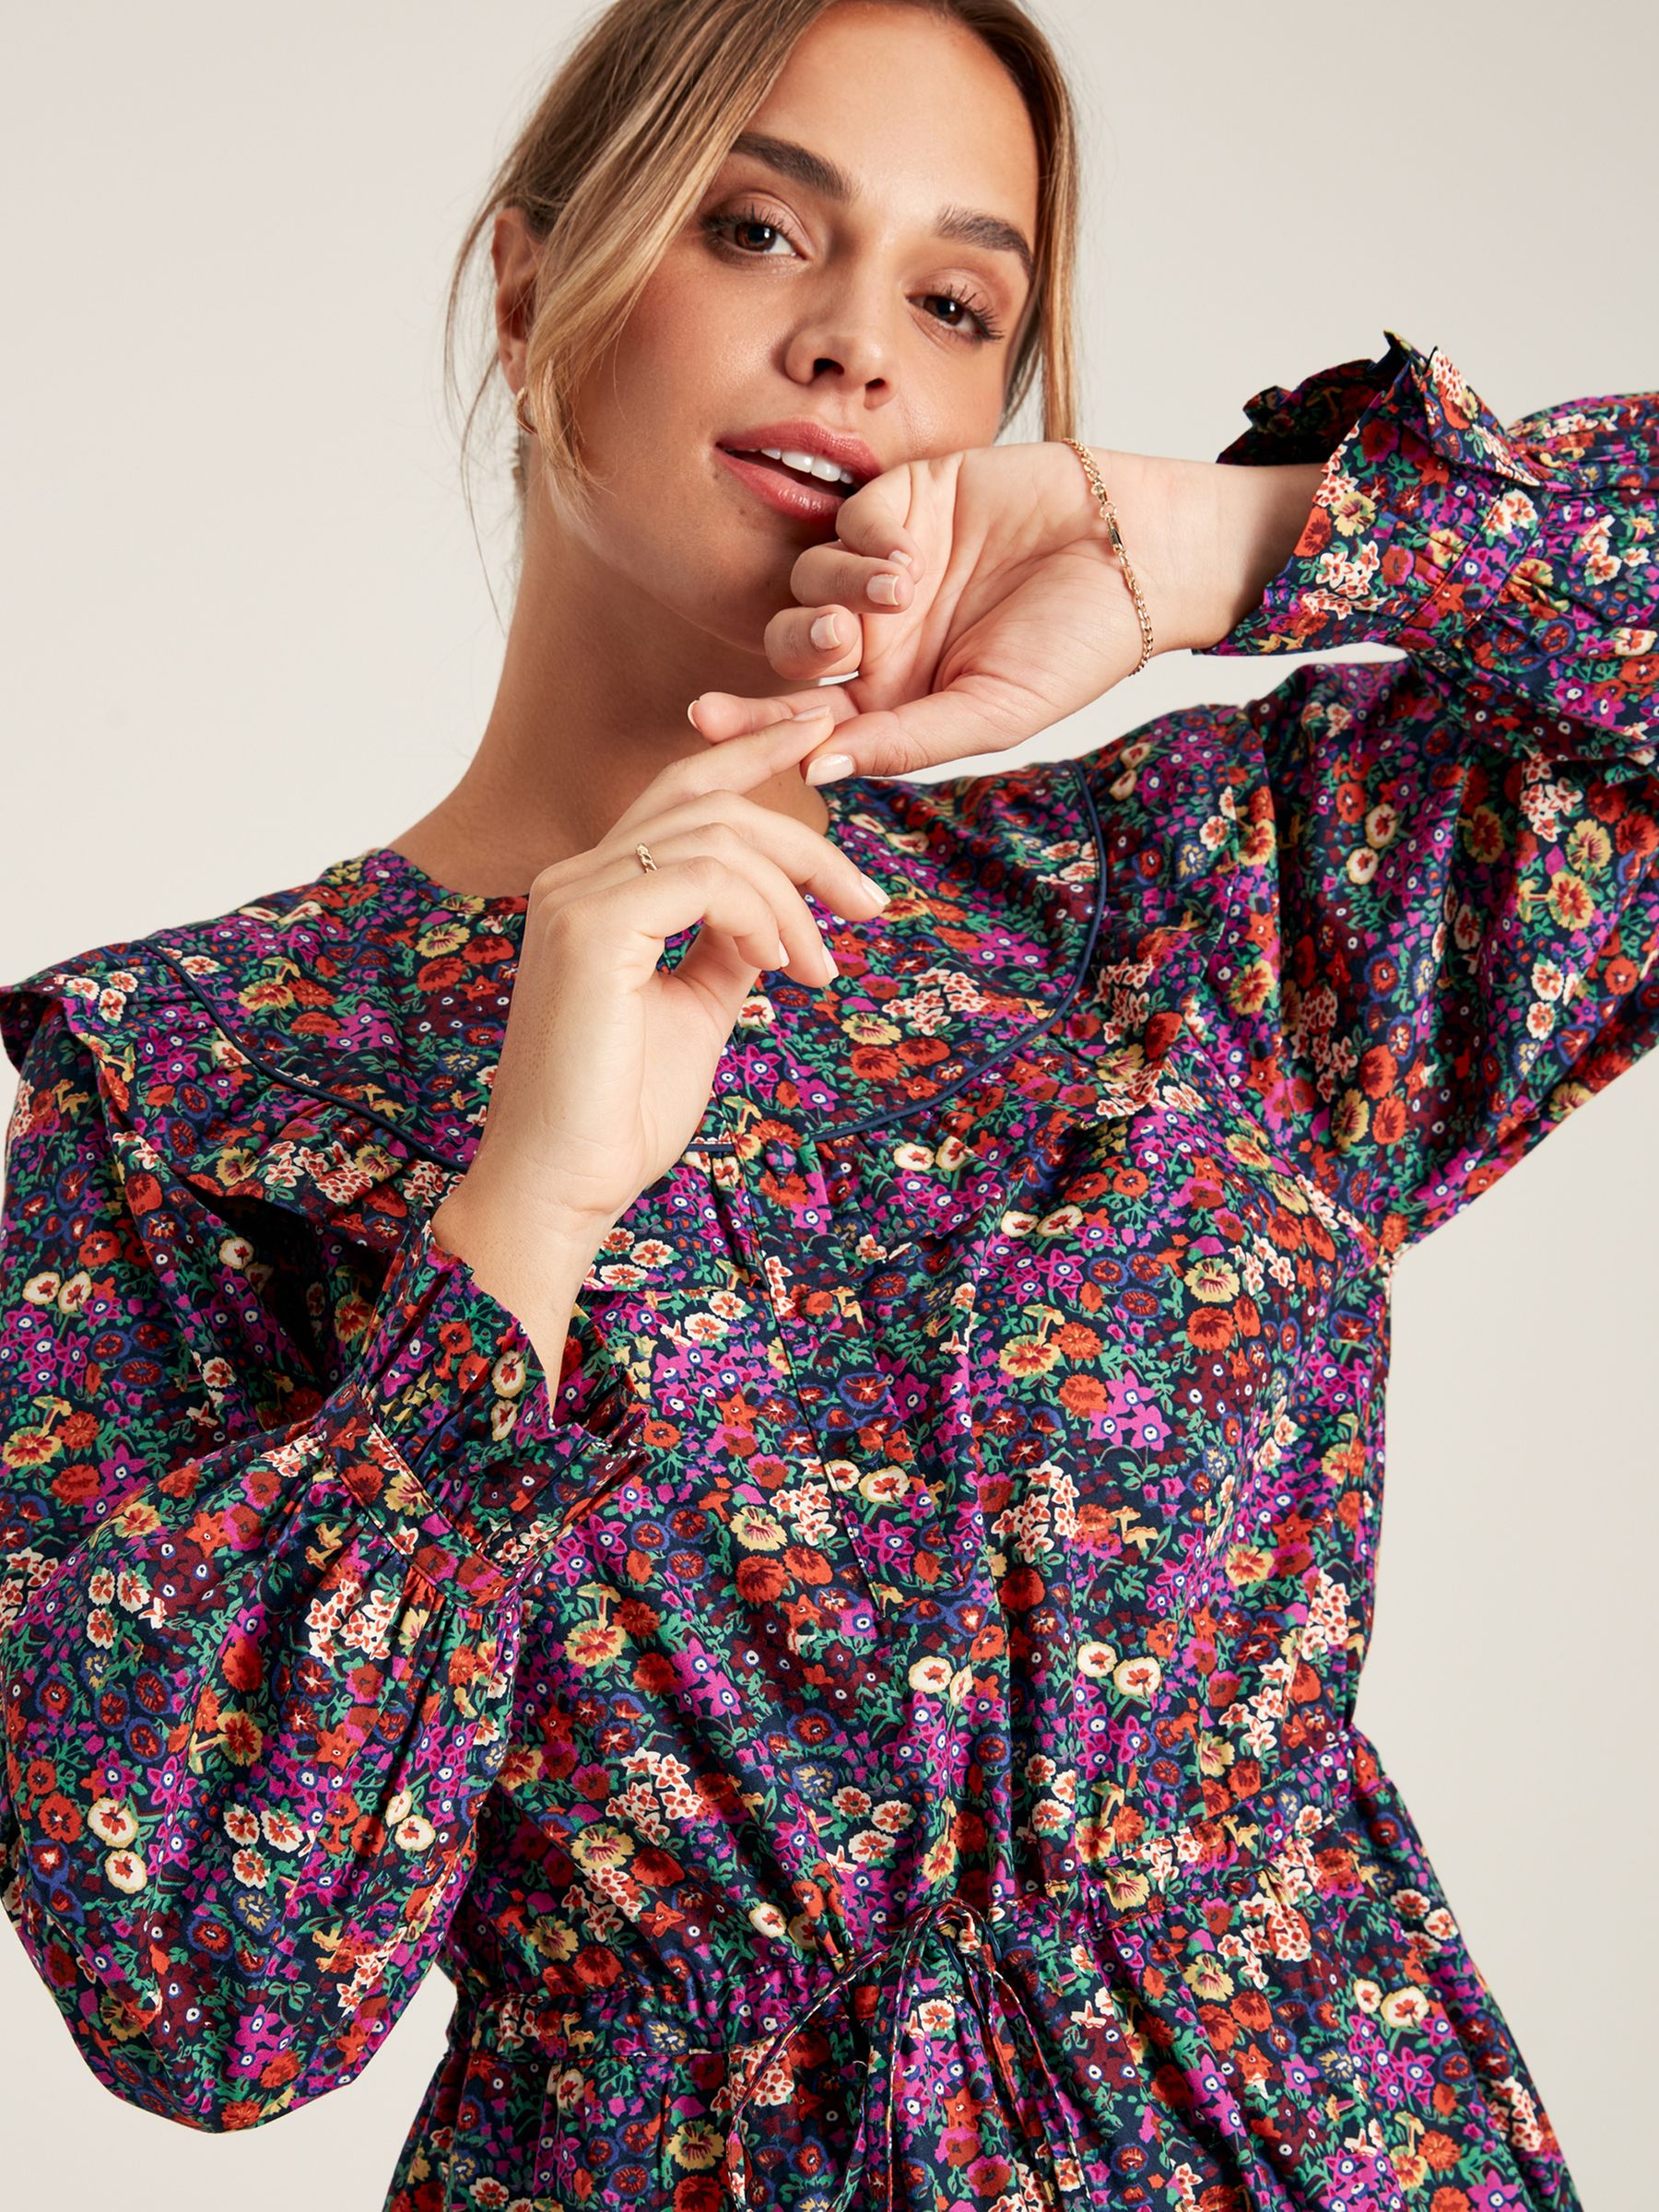 Buy Heidi Multi Frill Bib Dress from the Joules online shop